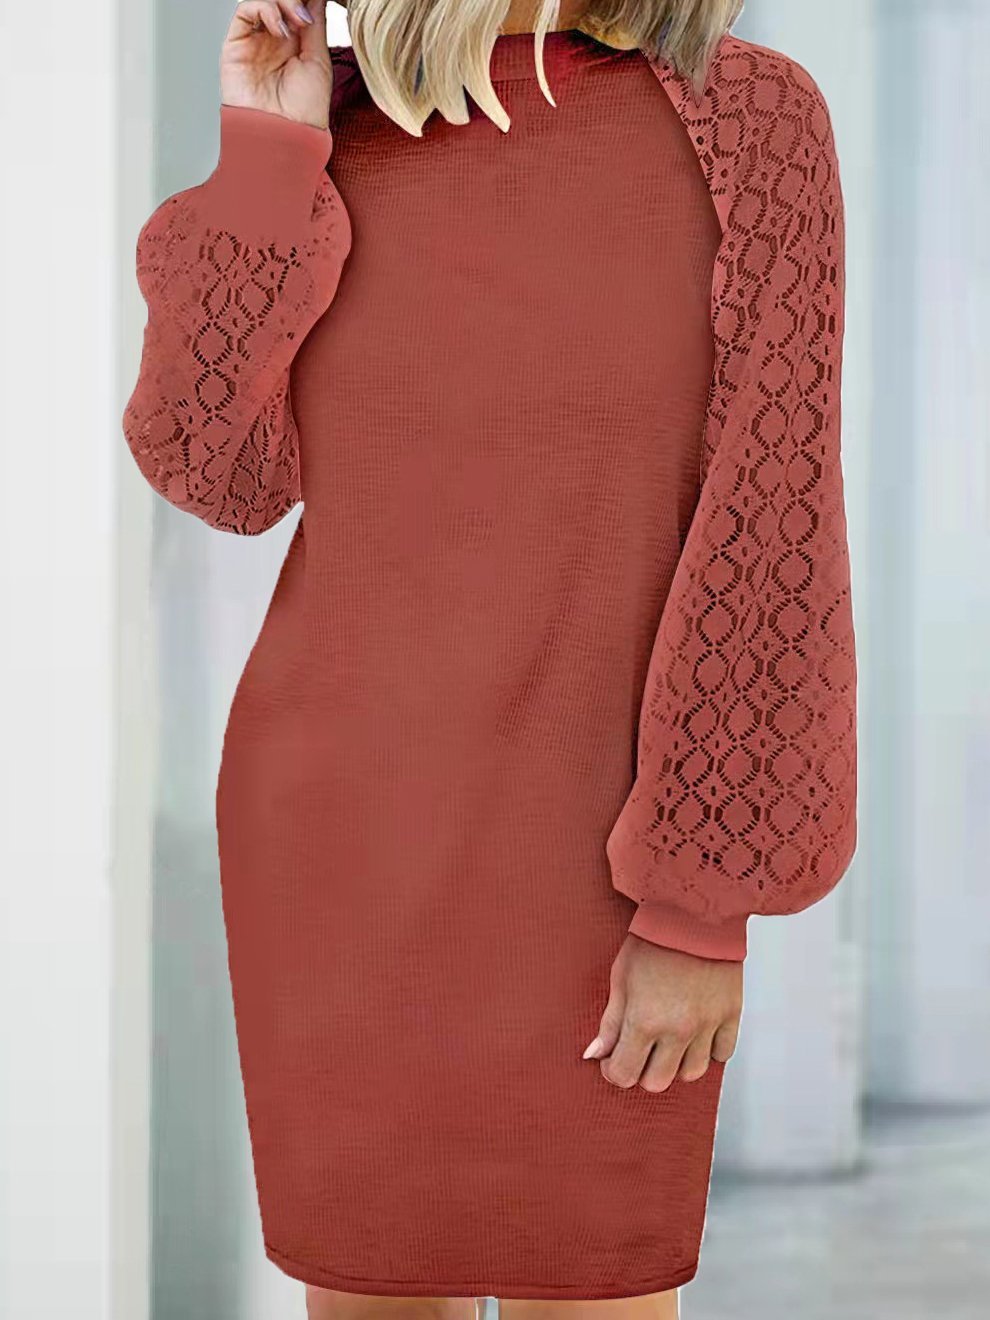 Mini Dresses - Round Neck Stitching Lace Long Sleeve Dress - MsDressly